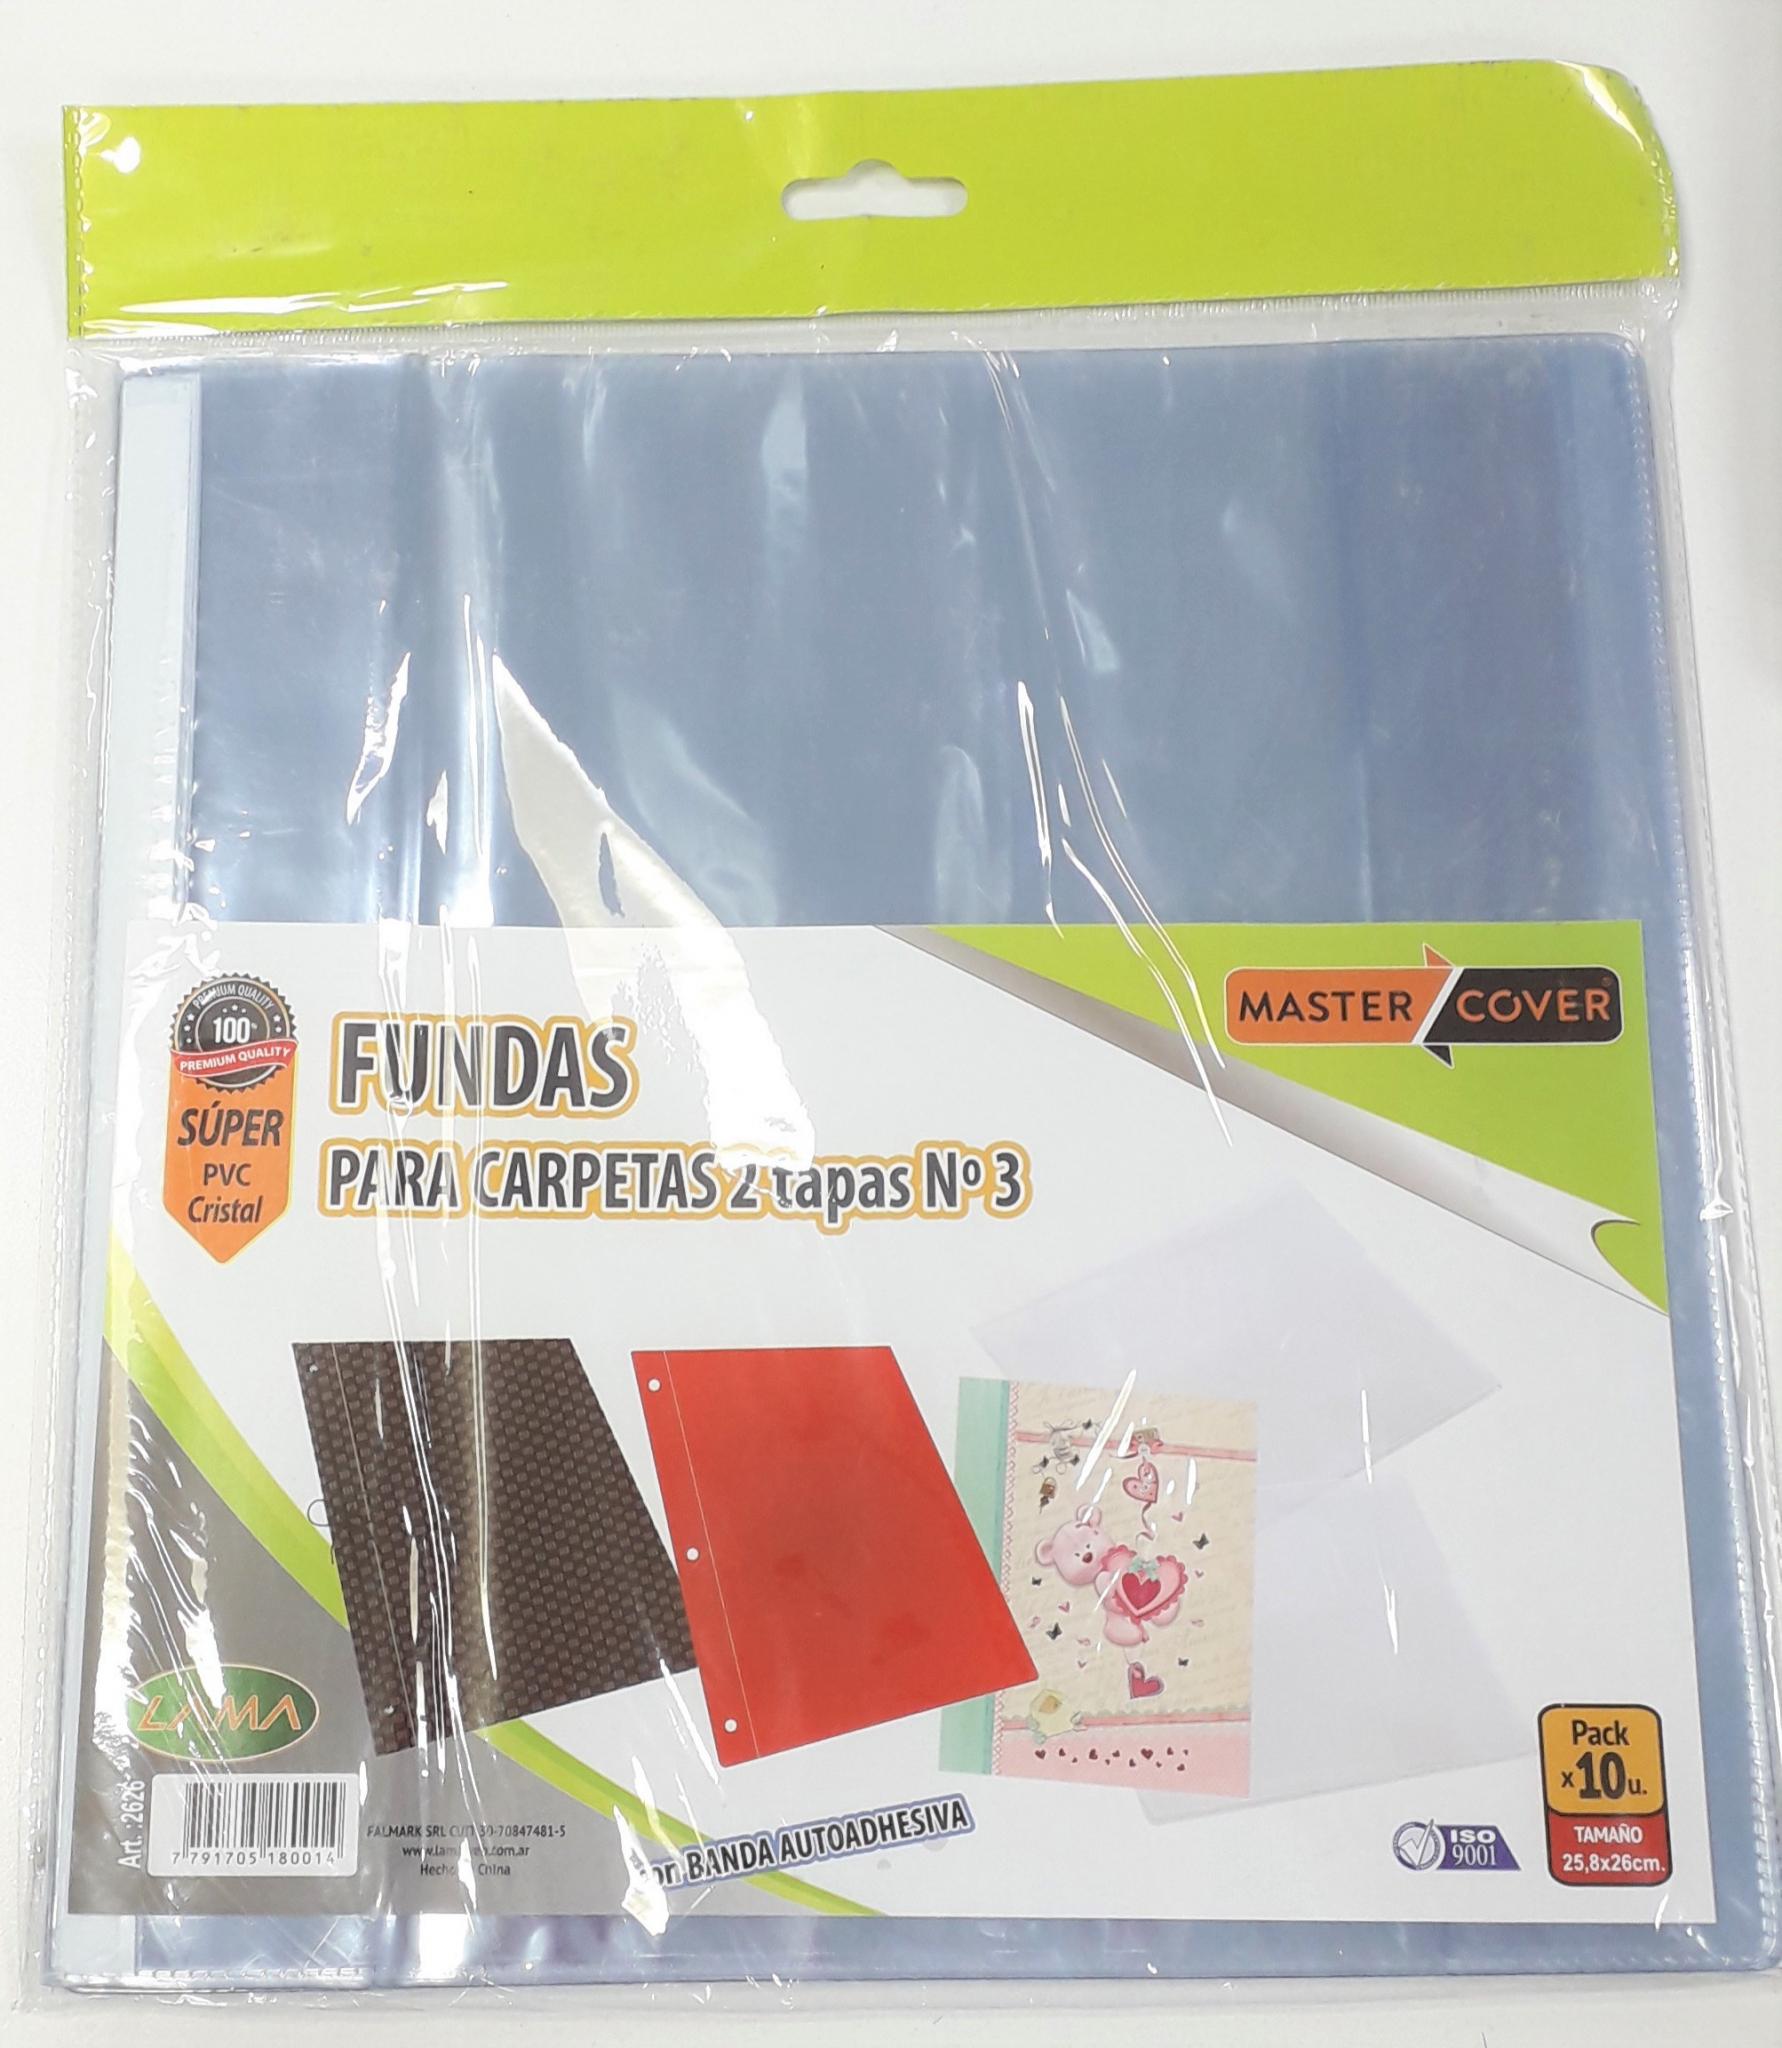 FUNDA P/CARPETA Nº3 2 TAPAS PVC X 10 UN 2626